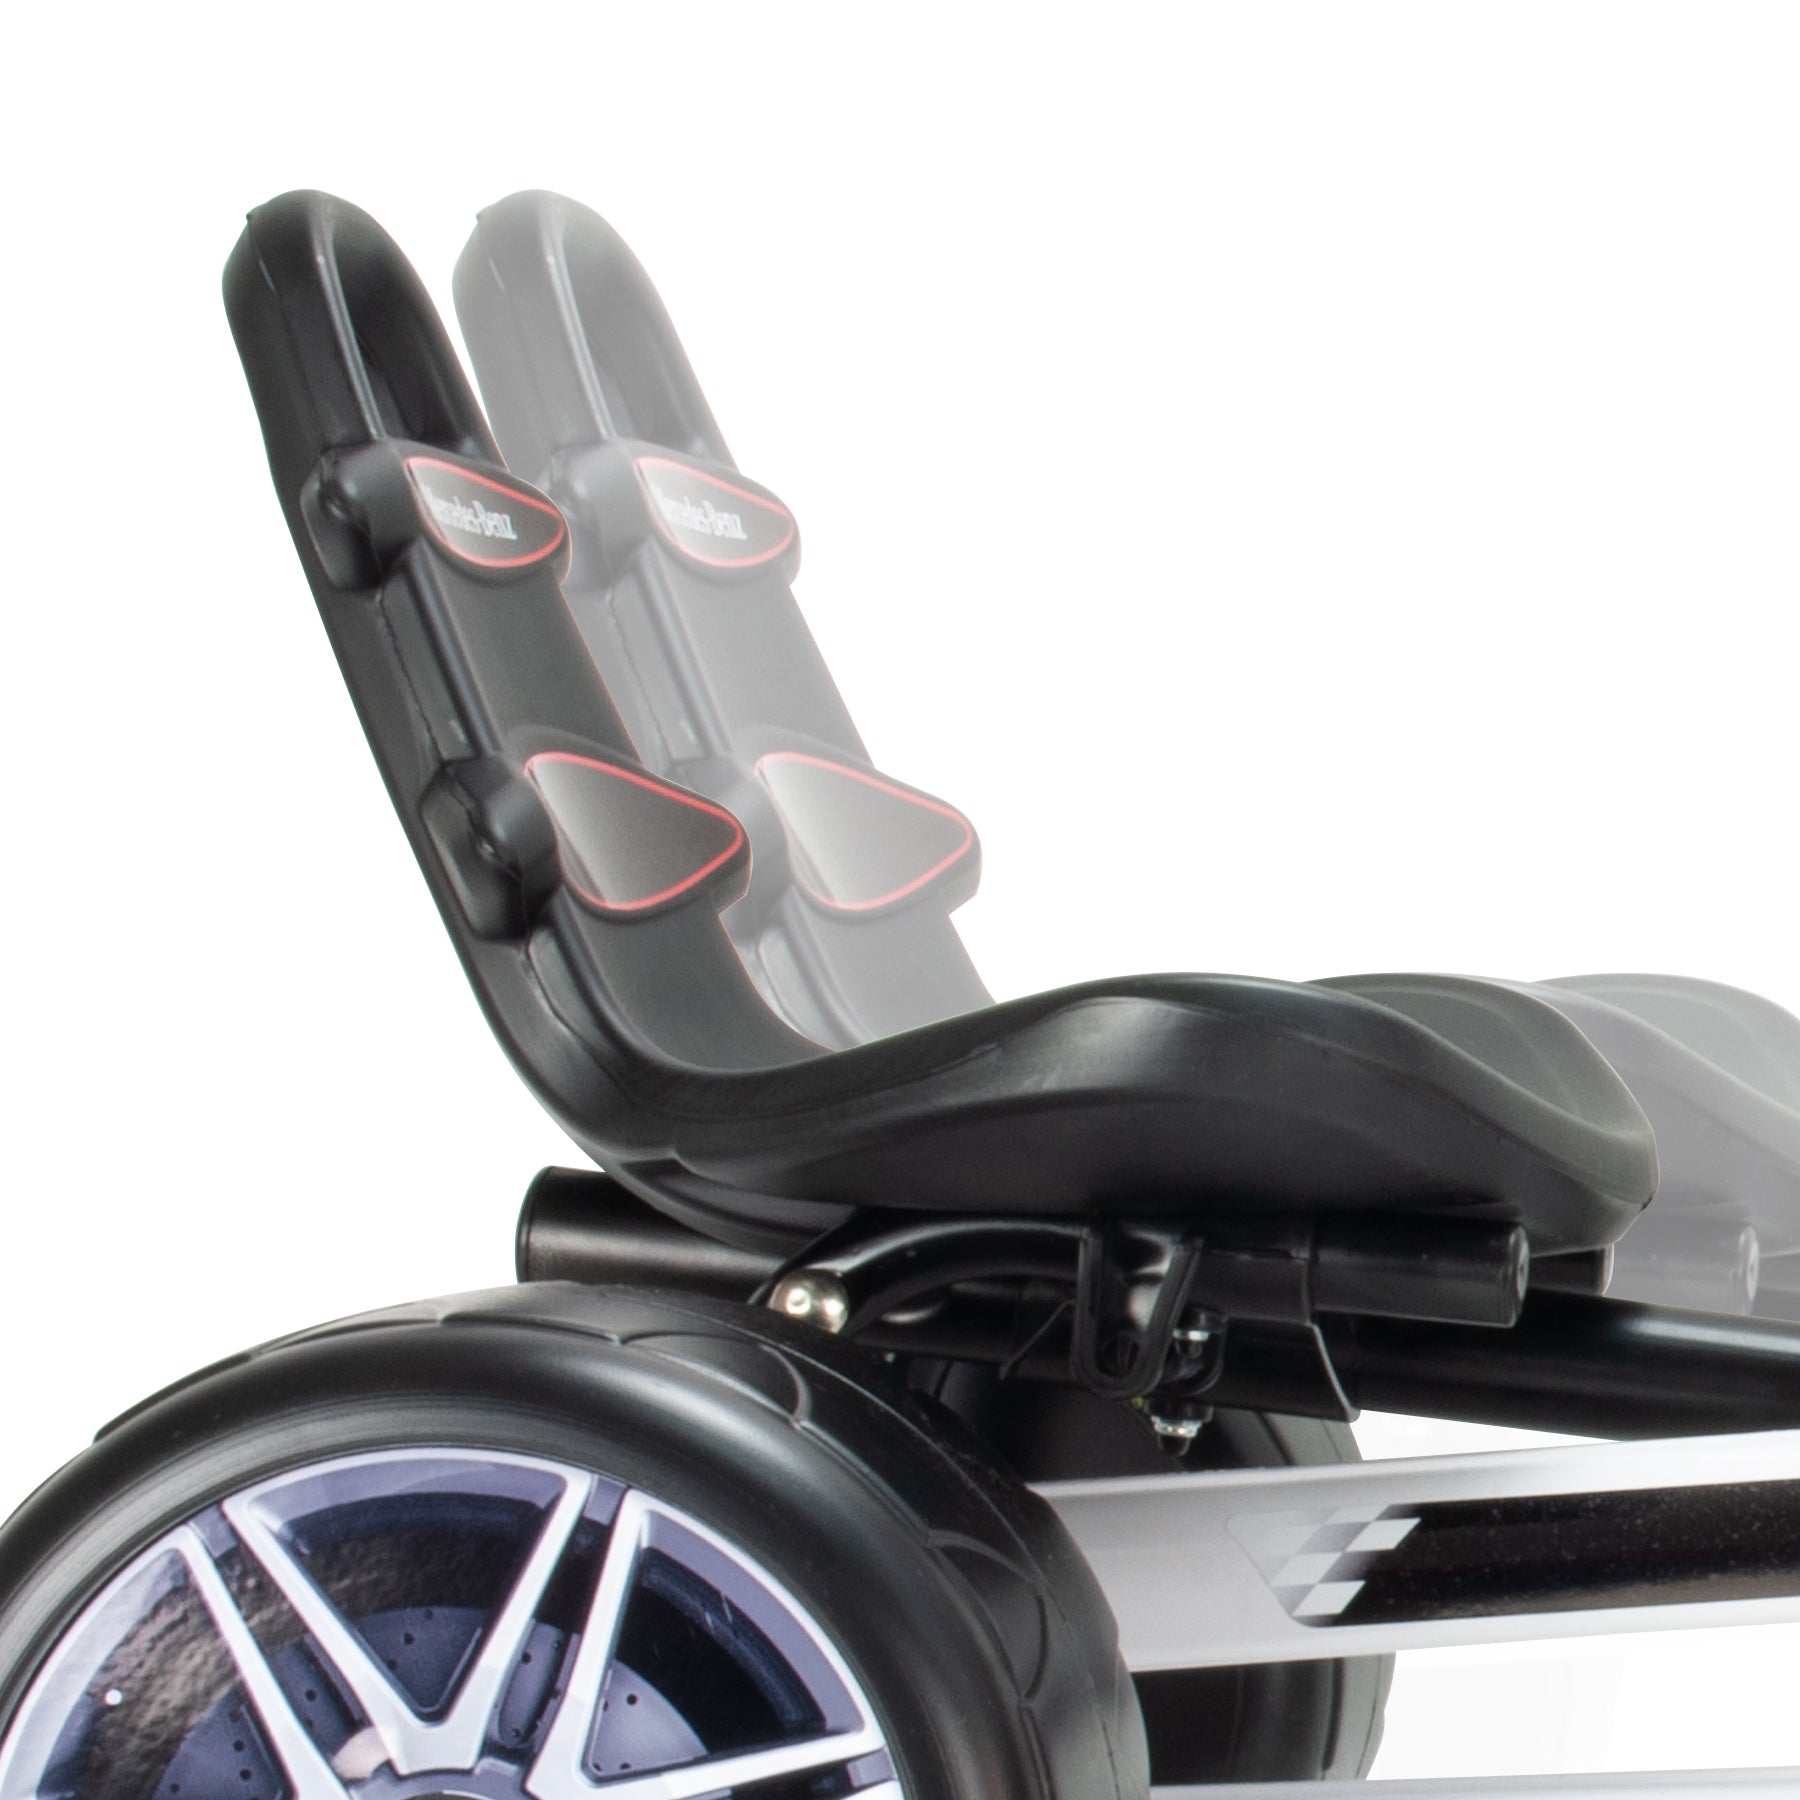 Officially Licensed Mercedes Pedal Go Kart w/ Adjustable Seats